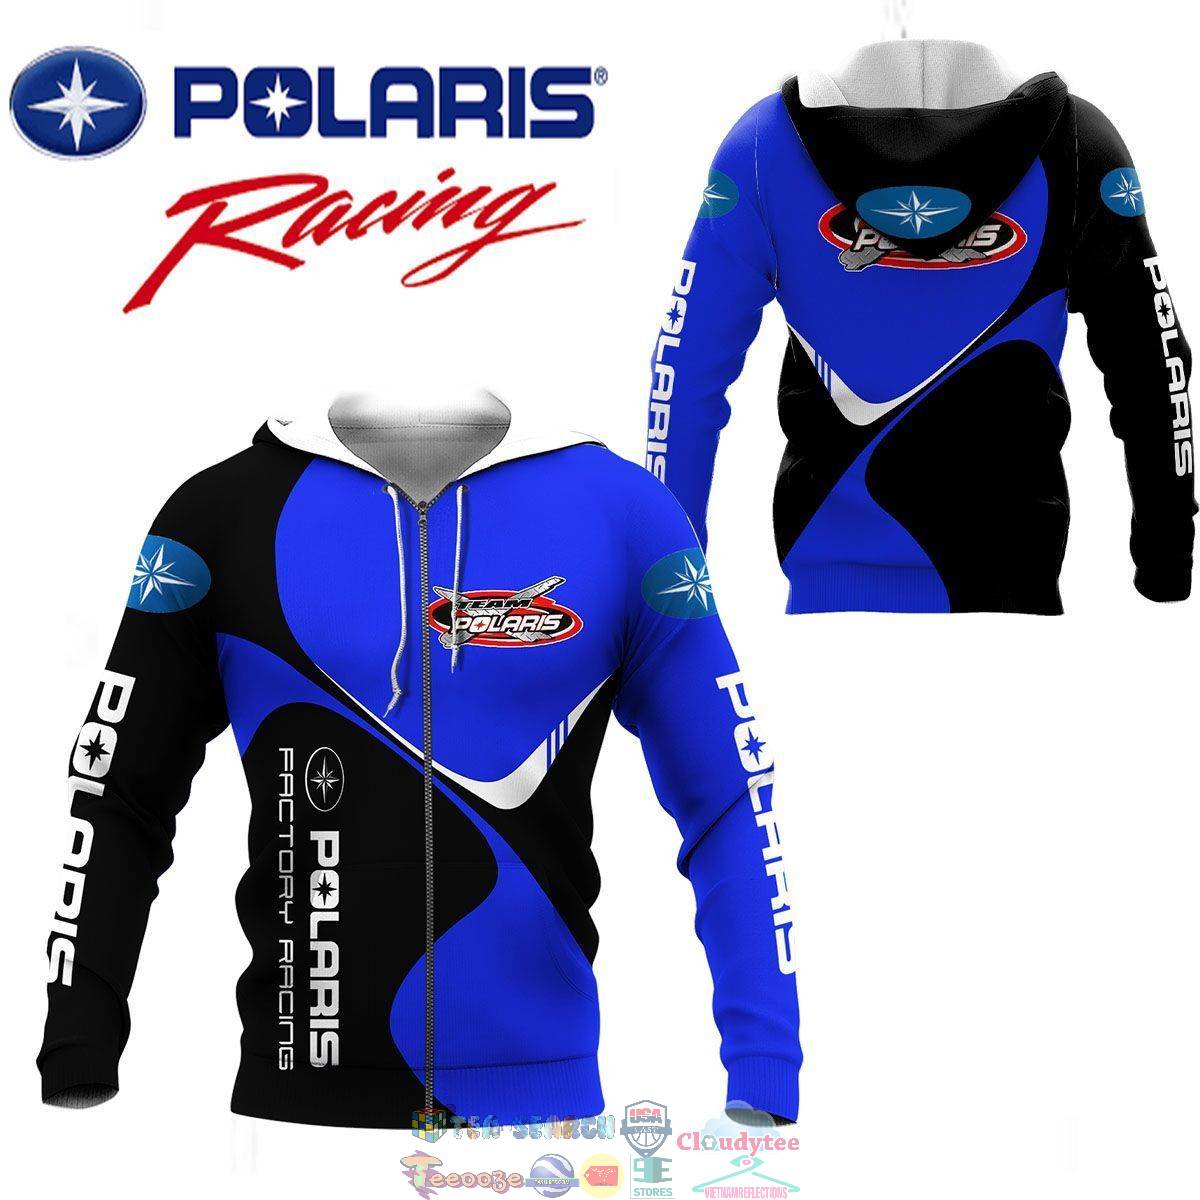 Polaris Factory Racing Blue 3D hoodie and t-shirt